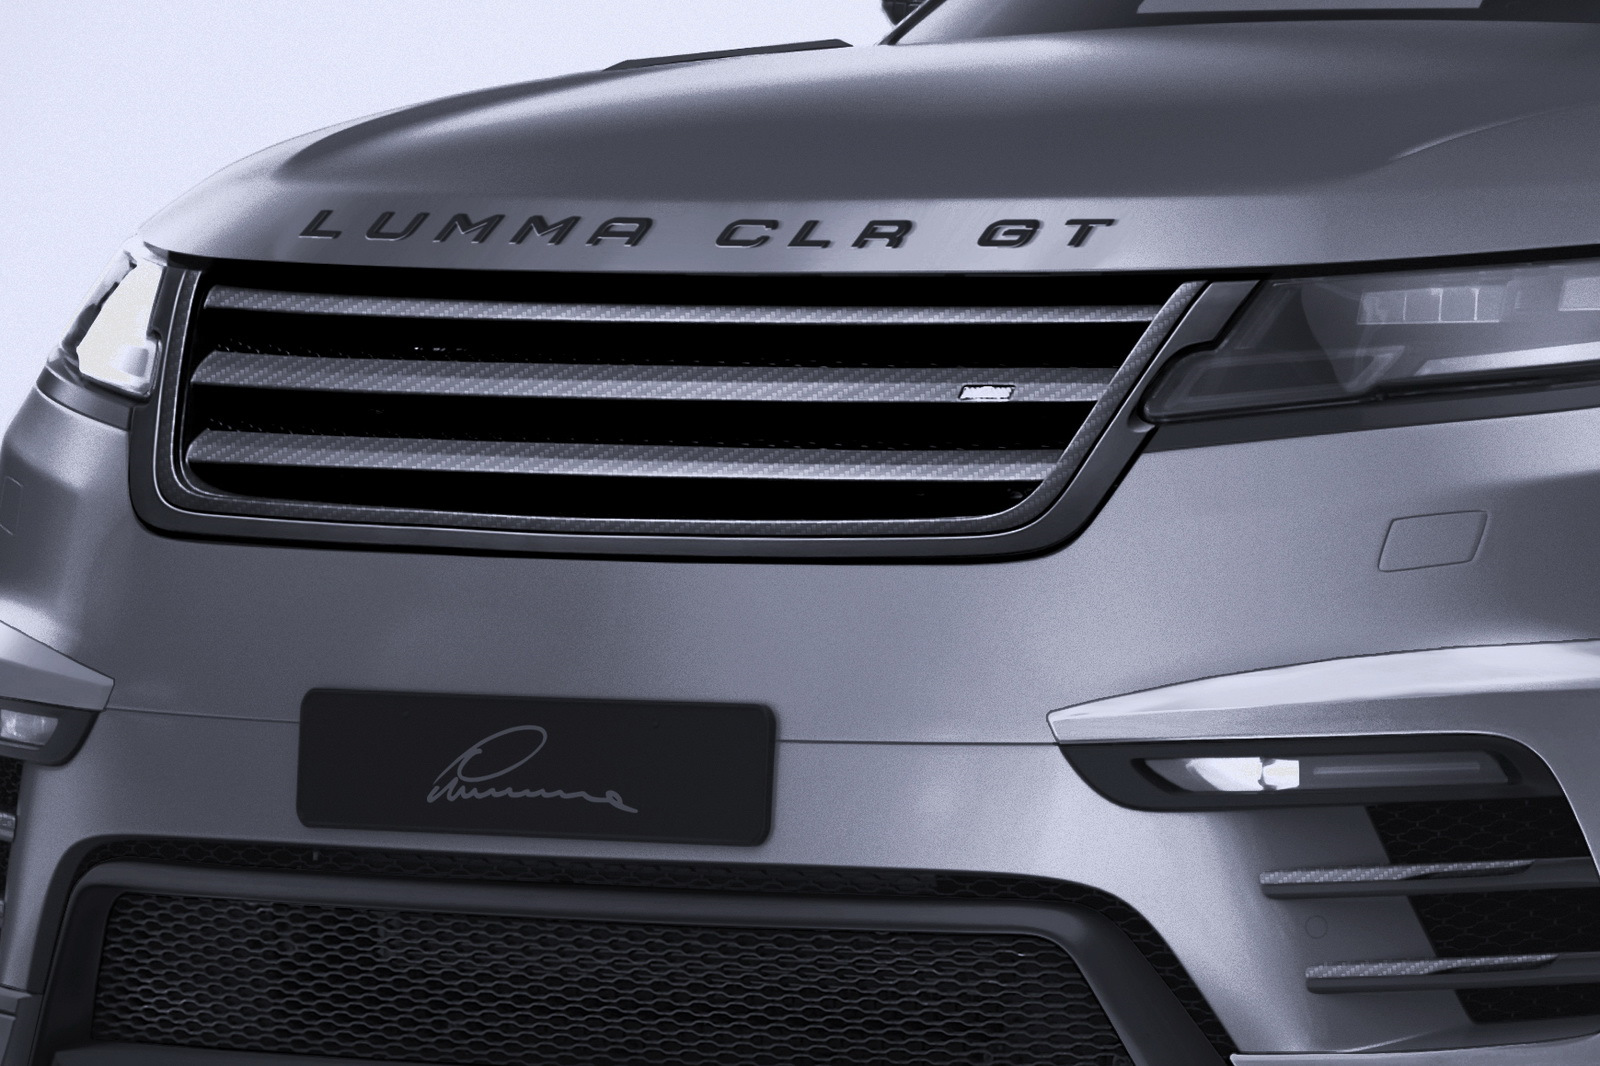 Lumma store. Range Rover Velar Lumma CLR gt. Evoque Lumma. Lumma Land Rover (1107). Land Rover Velar Lumma.